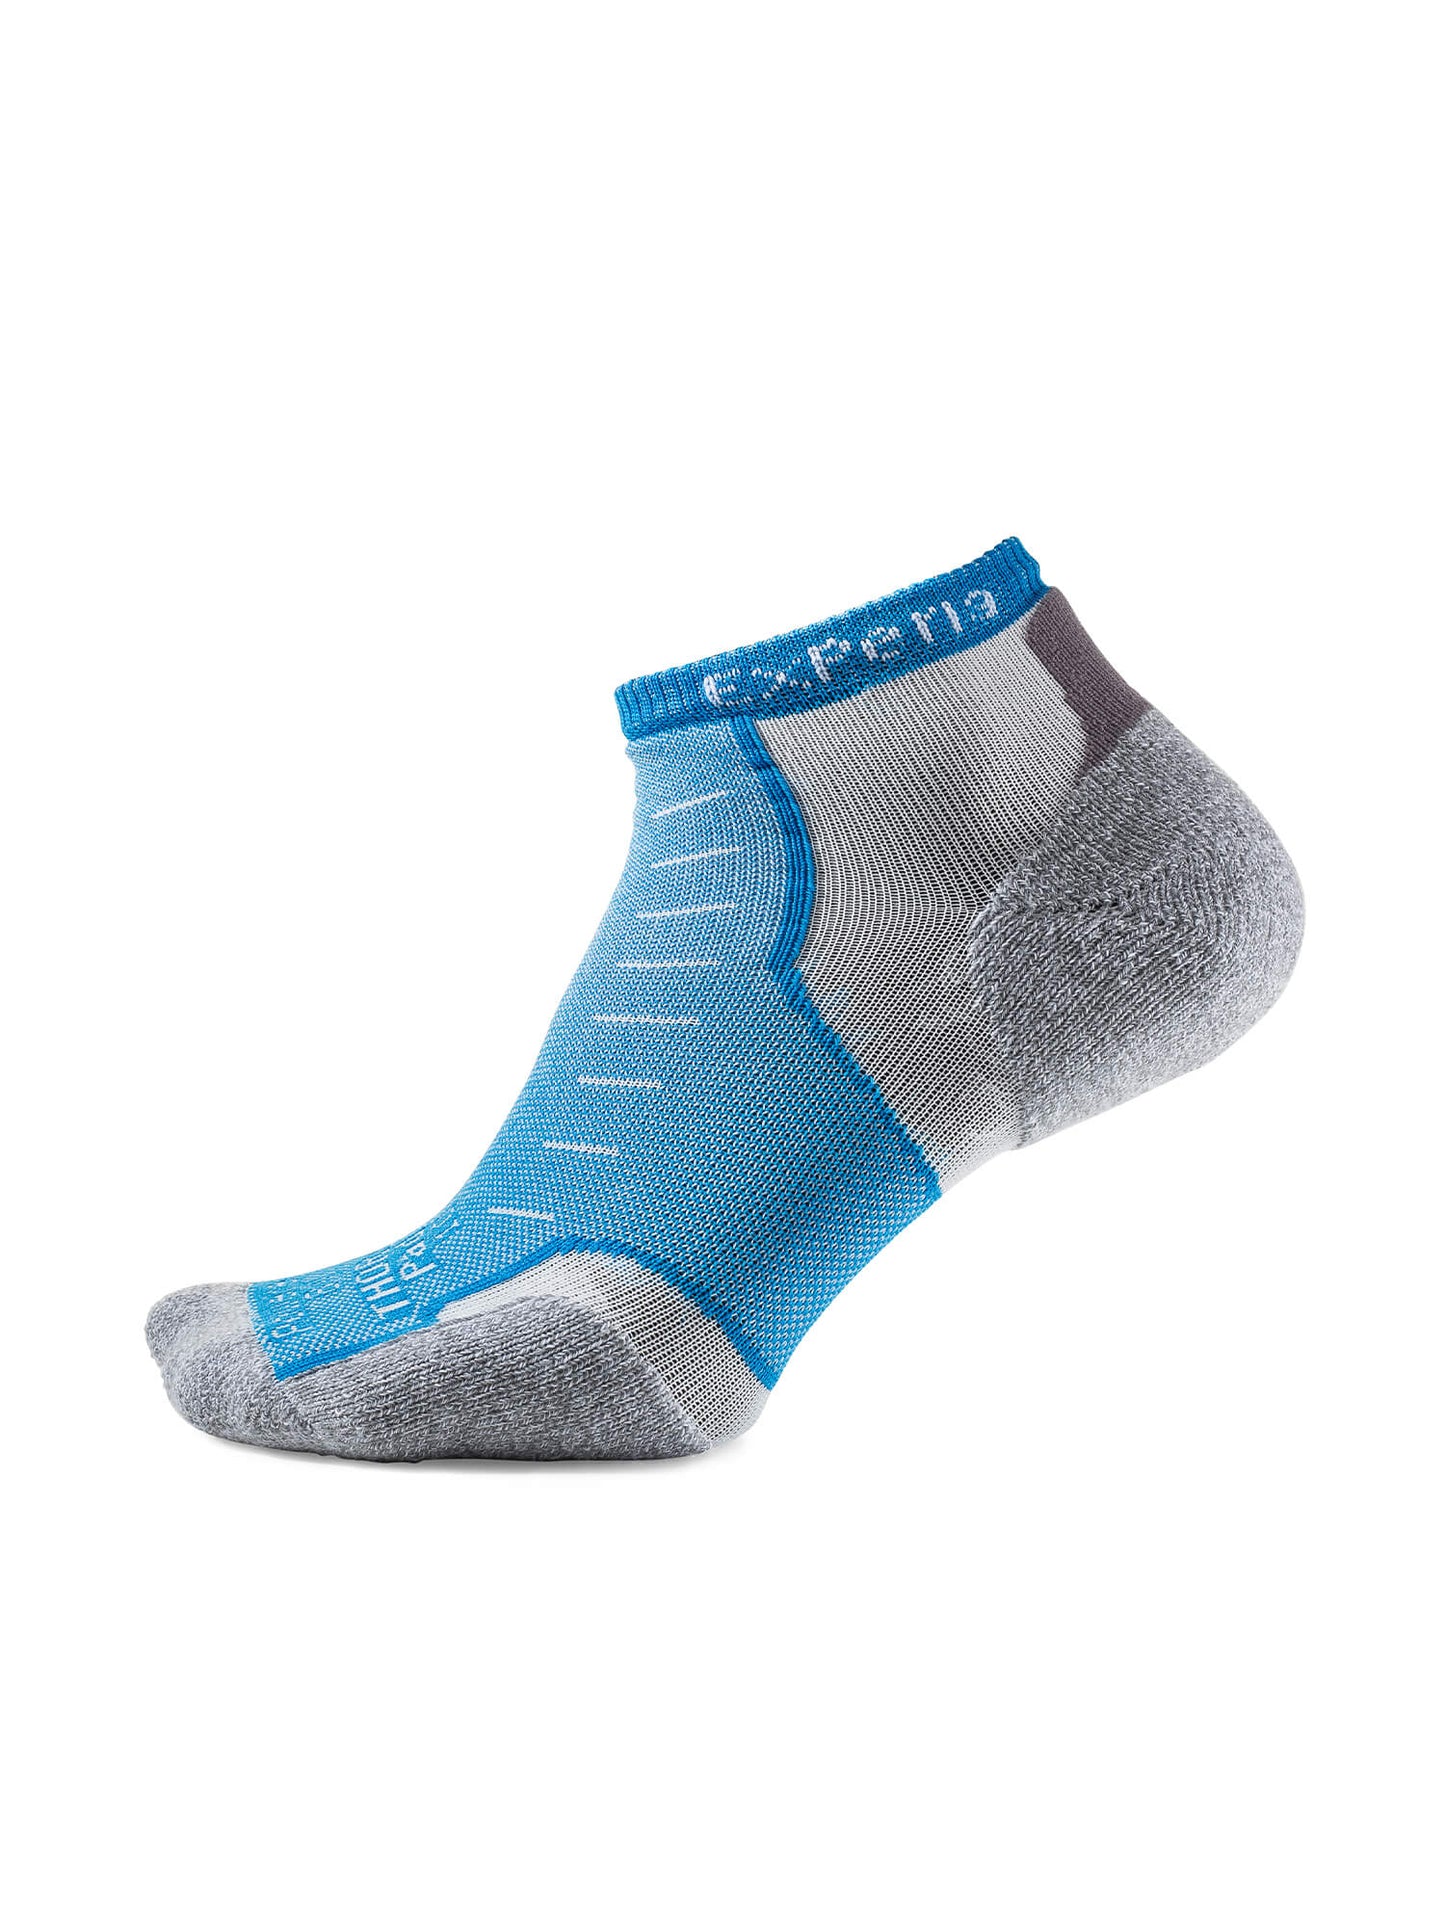 Blue and grey Thorlos Experia Coolmax Micro Mini Socks